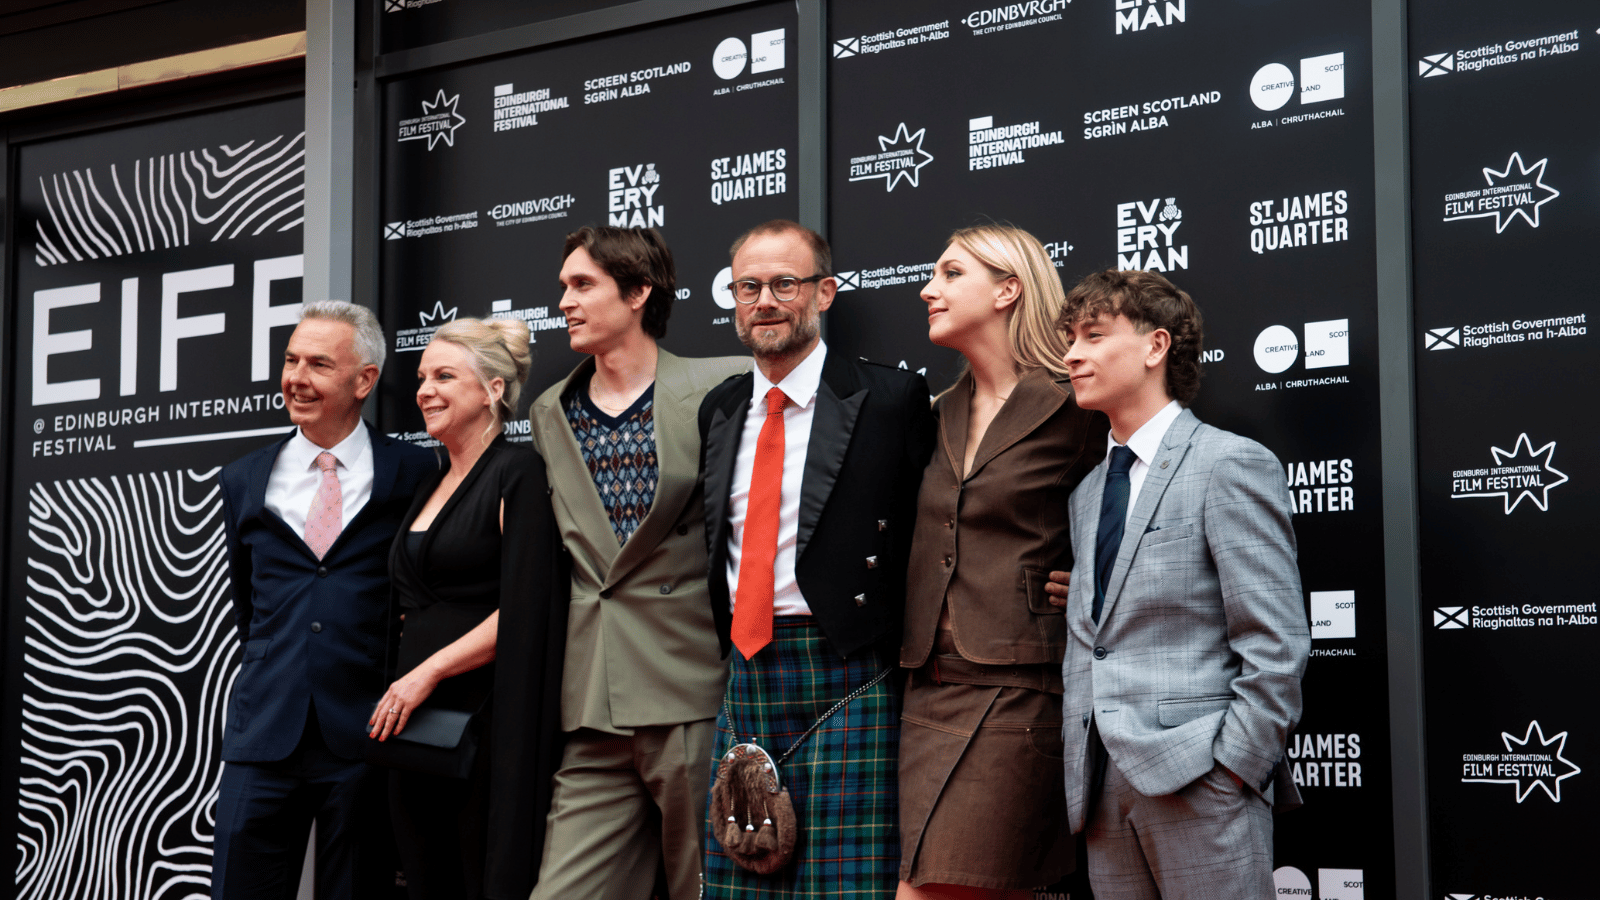 The cast of film Silent Roar at the Edinburgh International Film Festival, including Louis McCartney, Ella Lily Hyland and Mark Lockyer